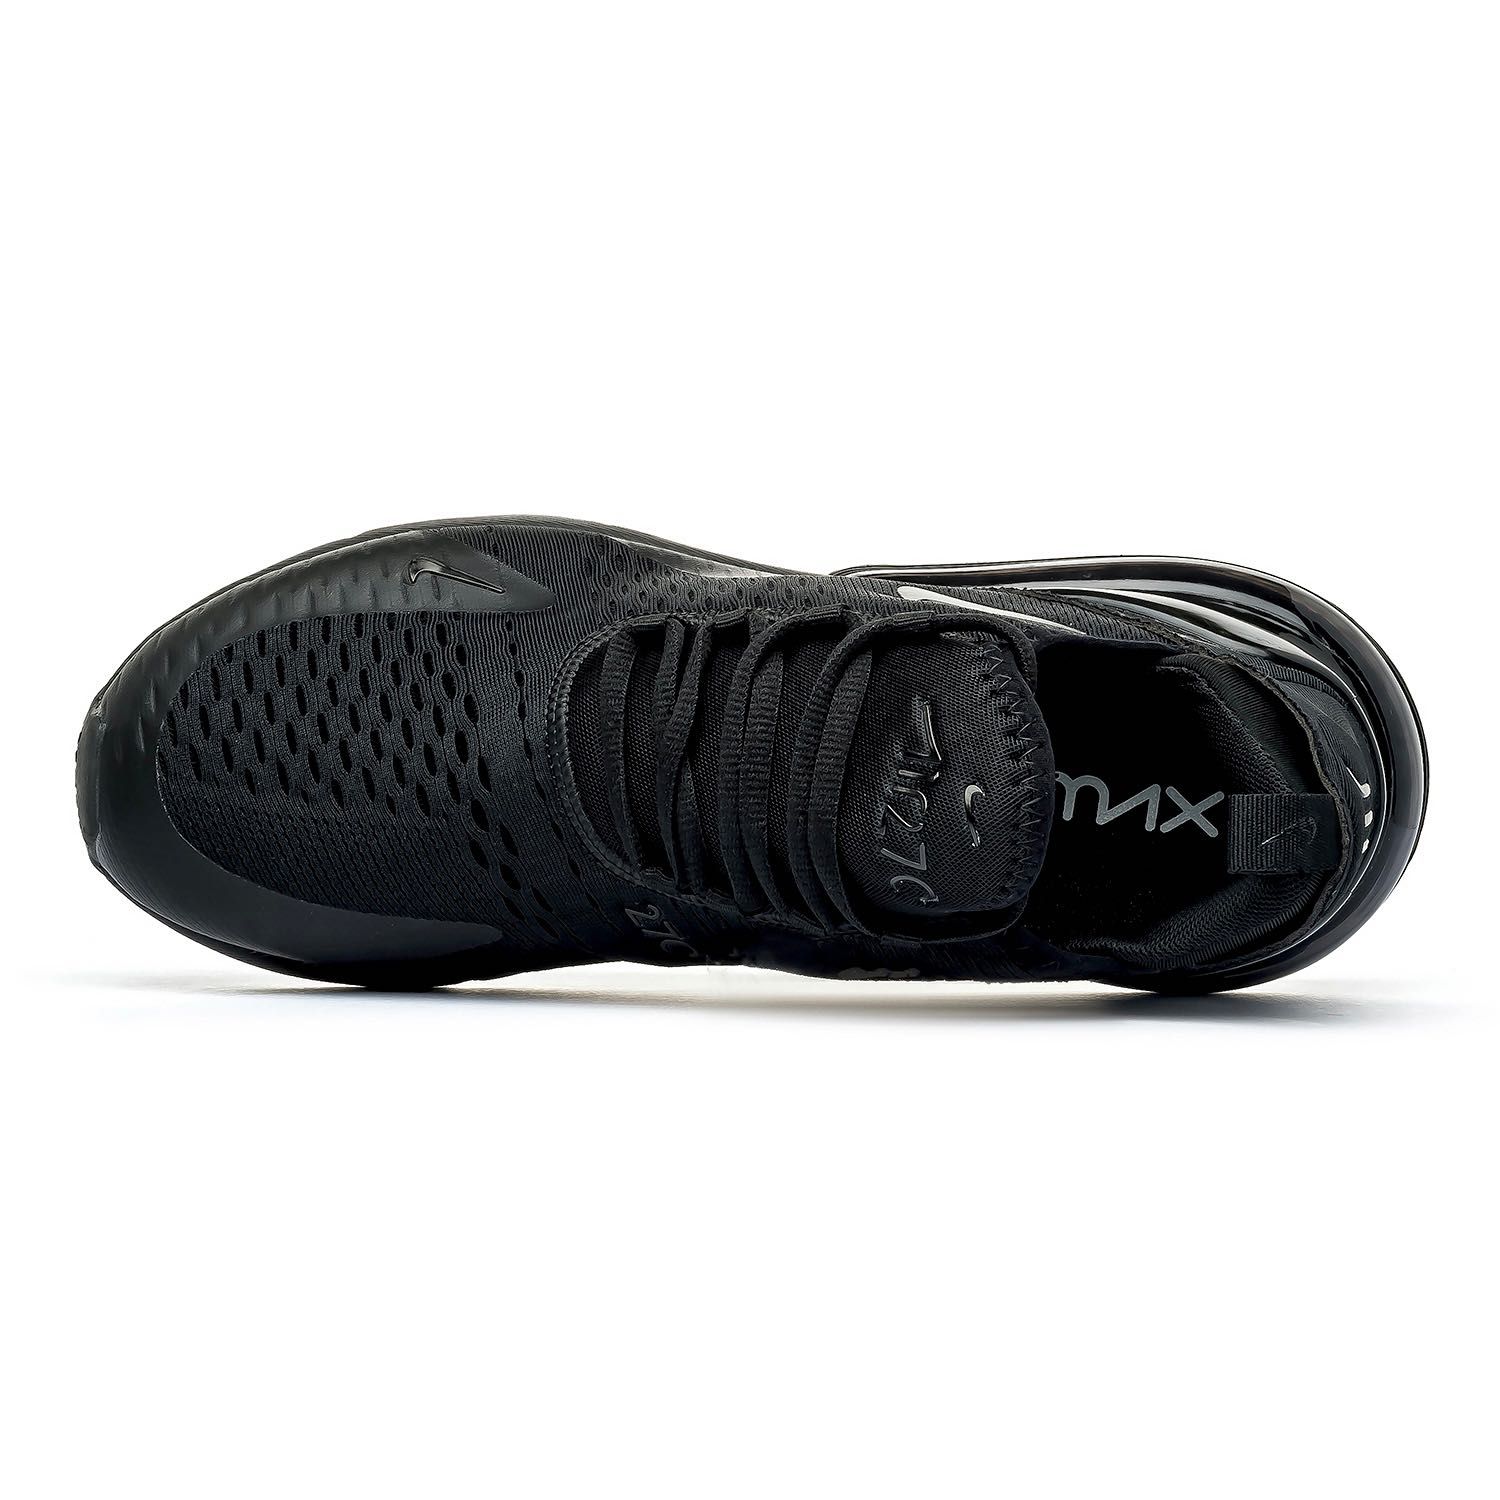 Мужские кроссовки Nike Air Max 270 Black. Размеры 41-45